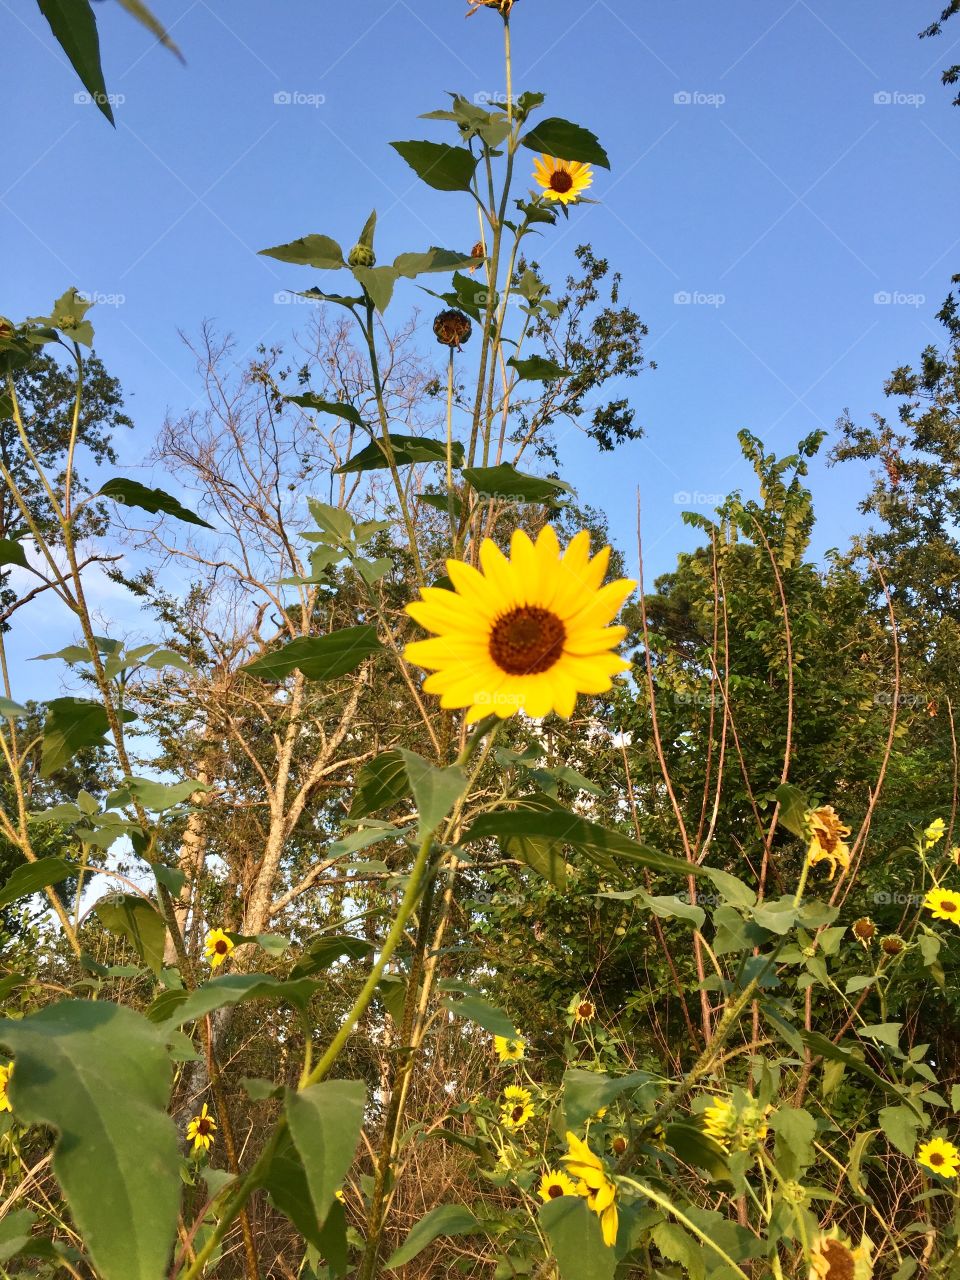 Bright sunflowers 